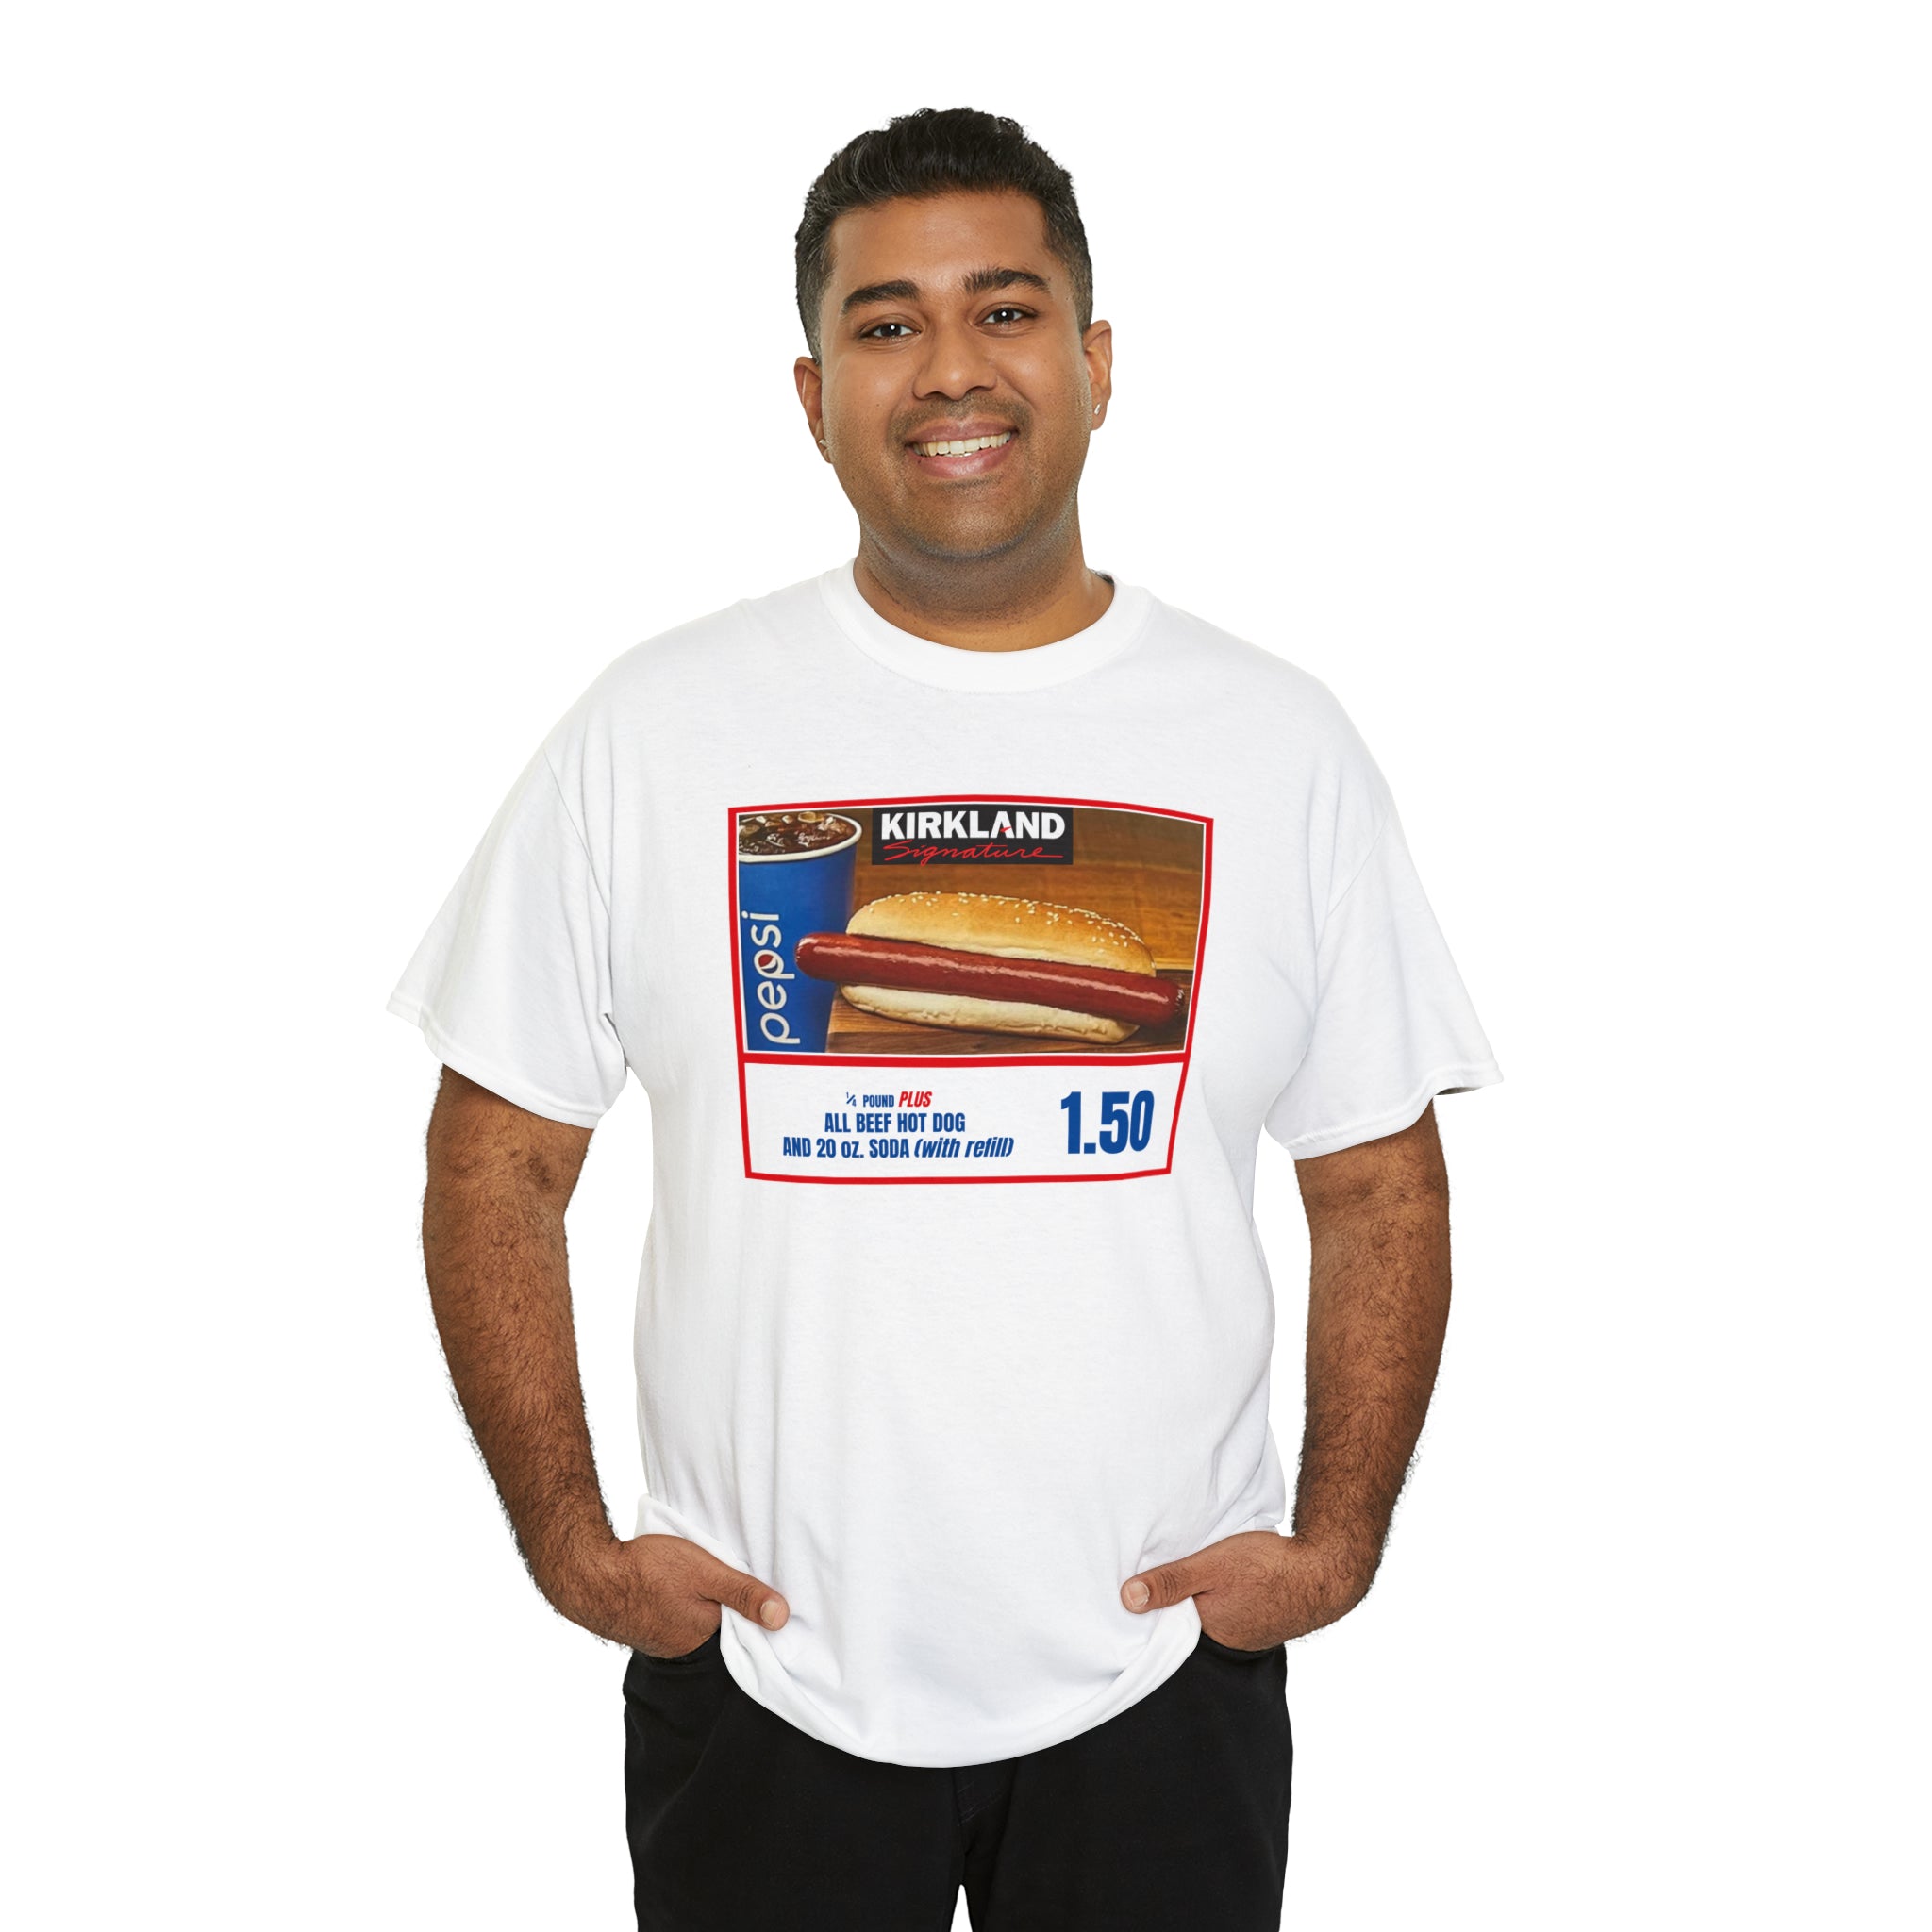 Costco Hotdog (no back quote) - Unisex Heavy Cotton Tee